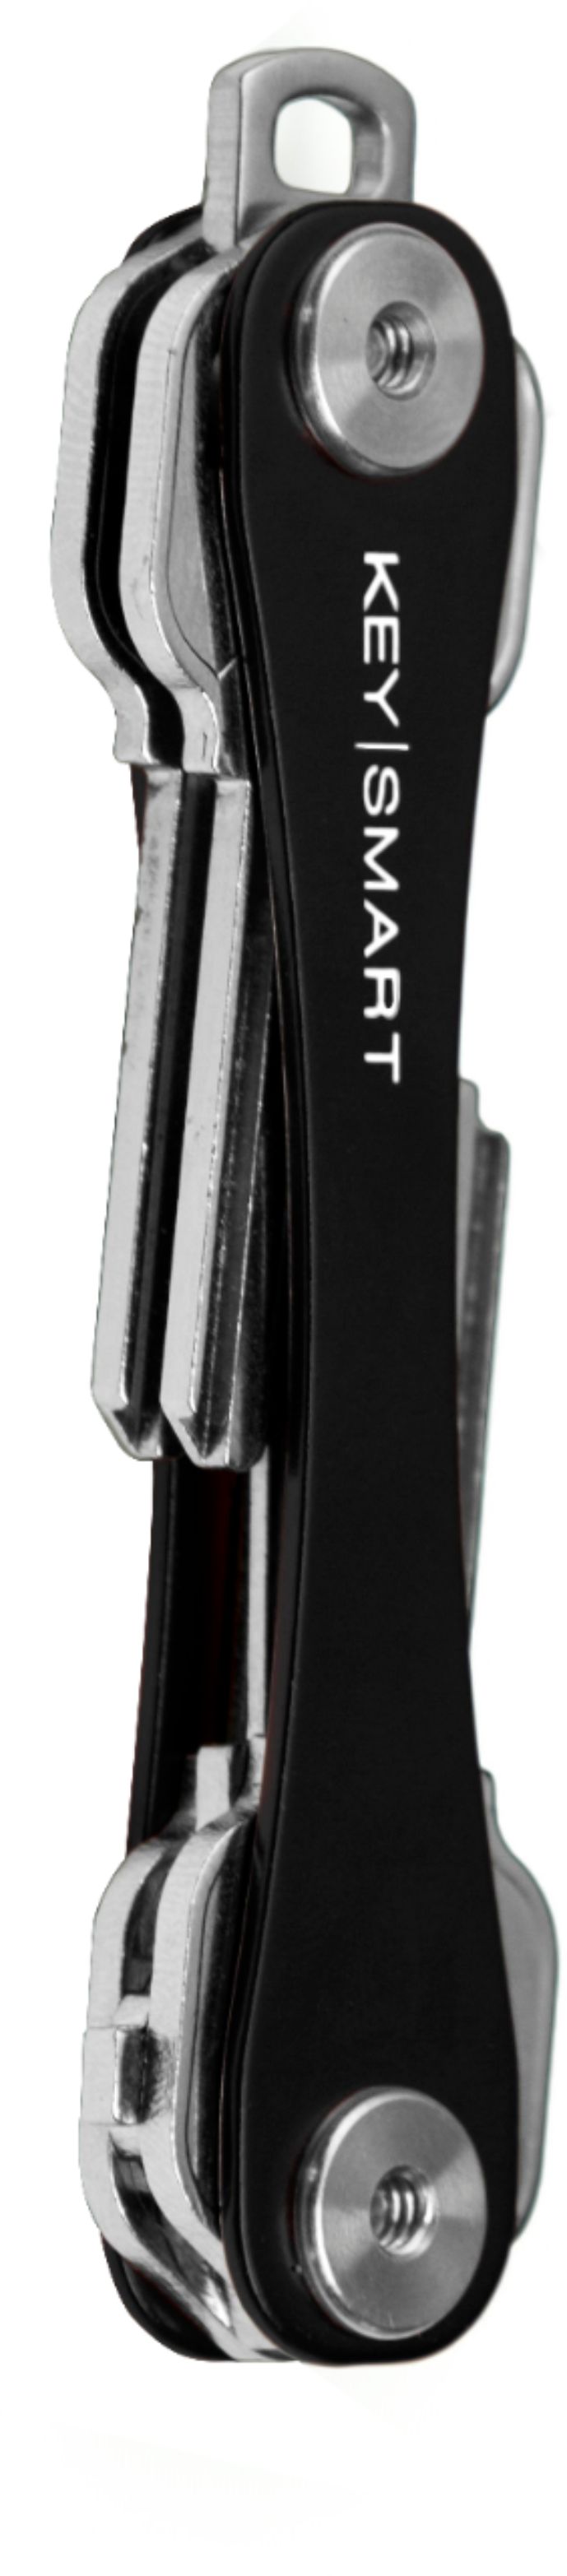 KeySmart Original Compact Key Holder Black KS019-BLK - Best Buy